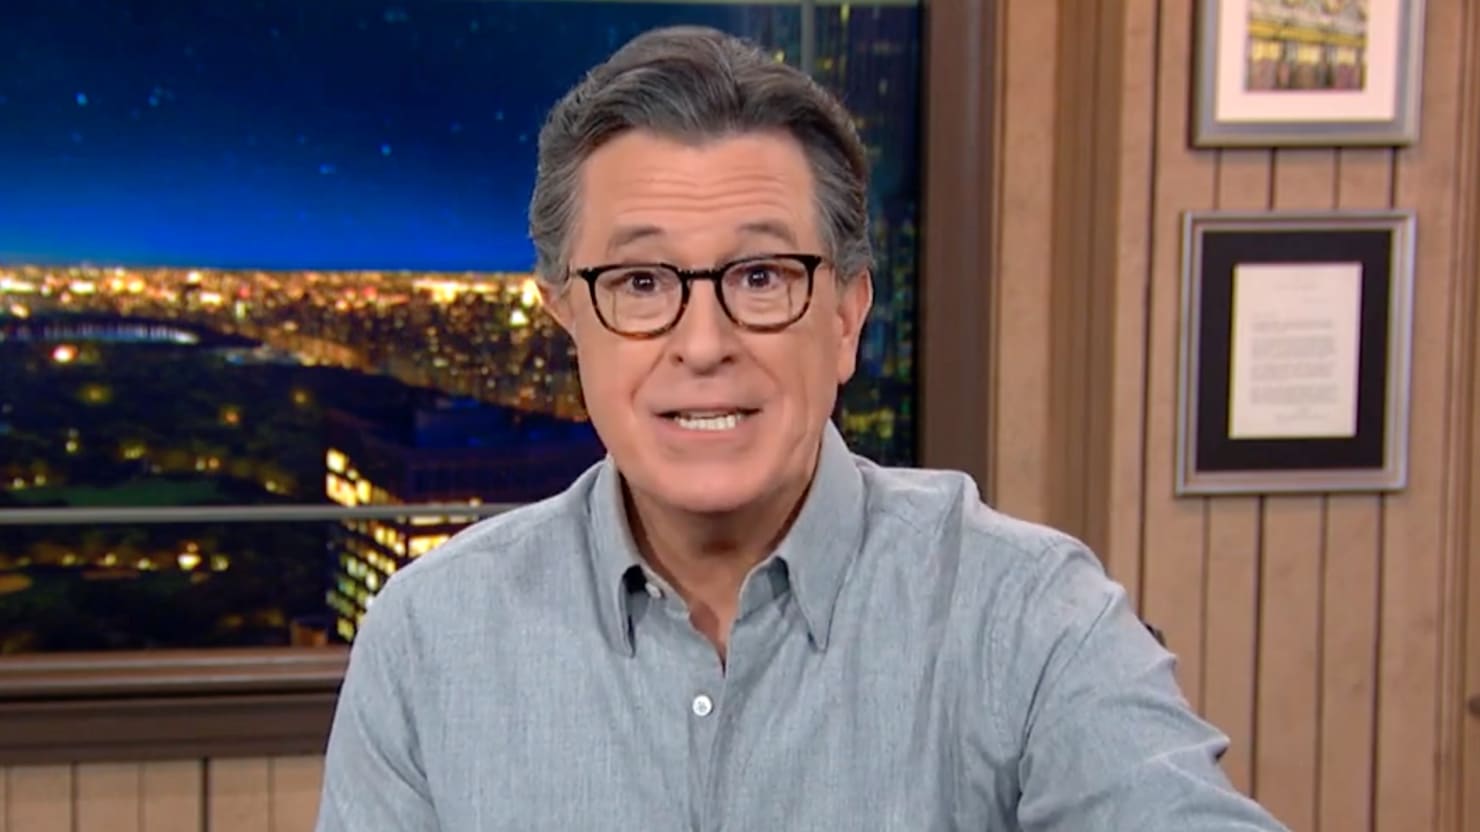 Stephen Colbert mocks Trump’s ‘unbelievably sad’ vaccine statement